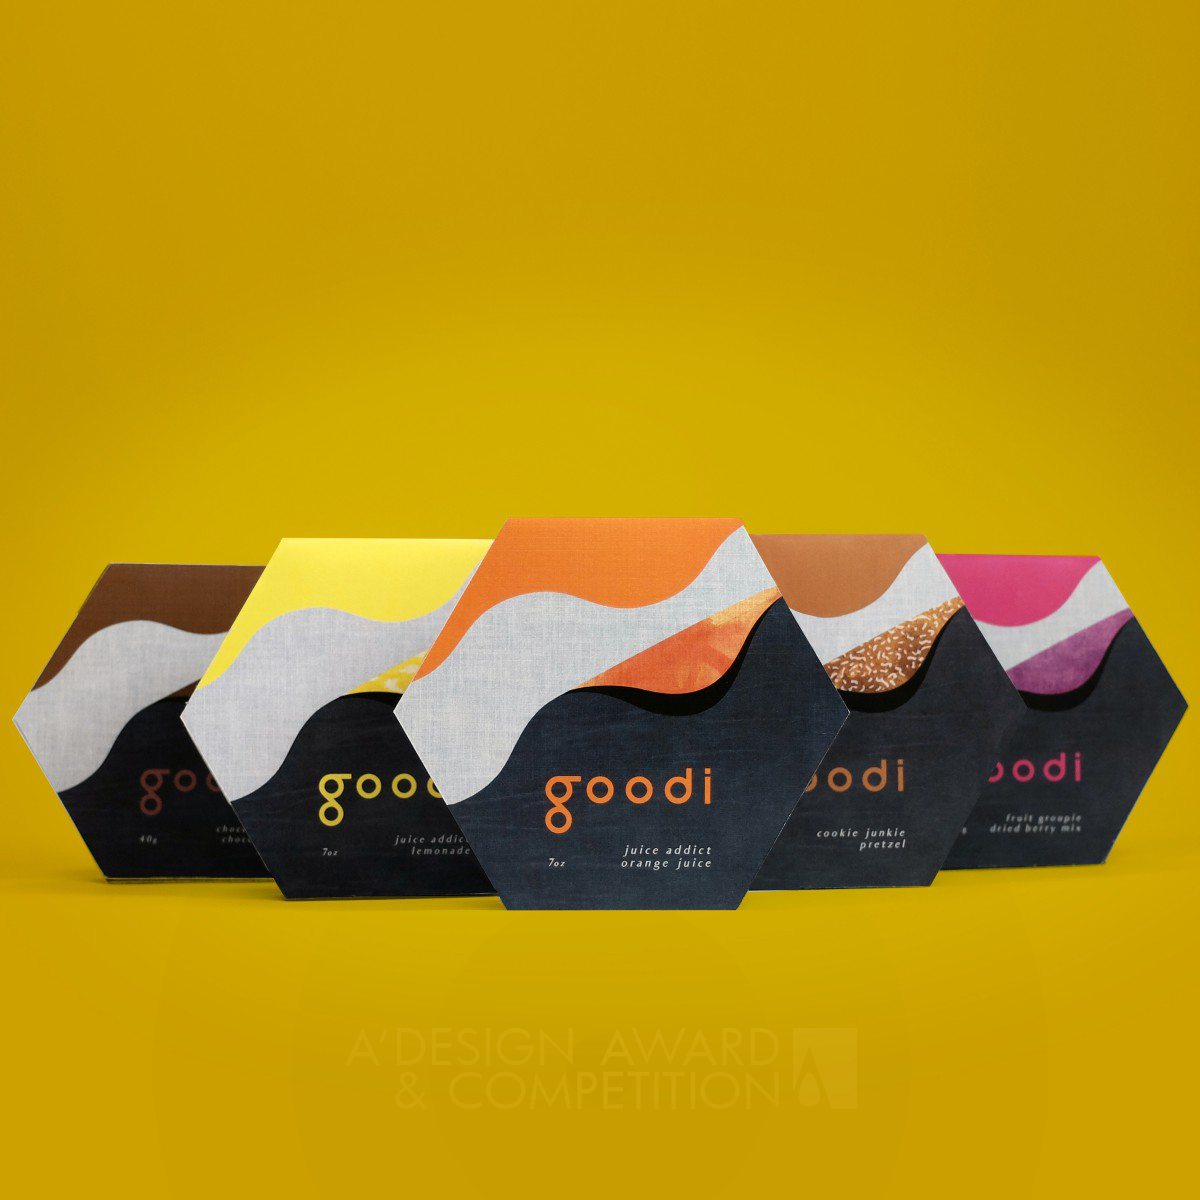 Goodi Food packaging by CHIEN CHUN